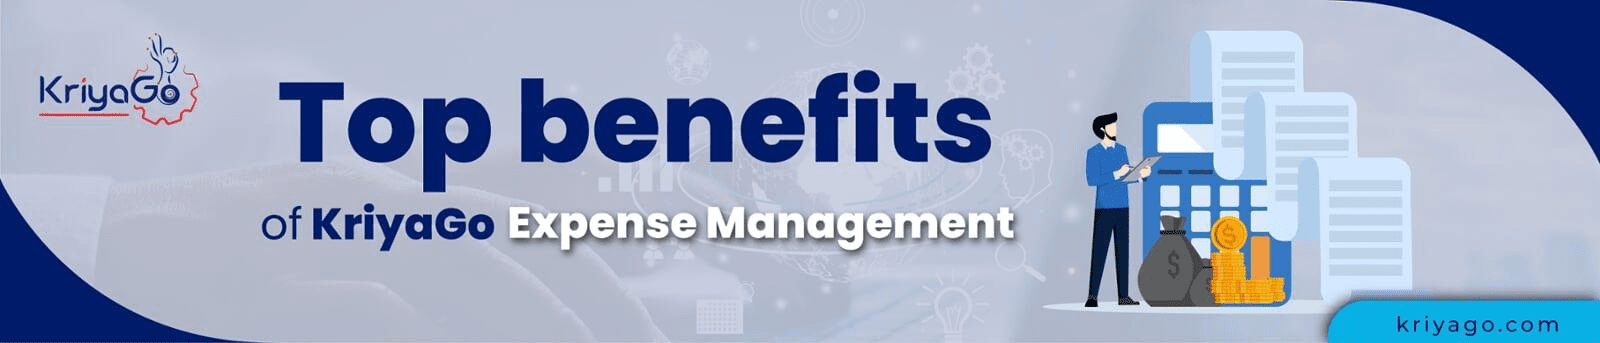 Top benefits of KriyaGo Expense Management 